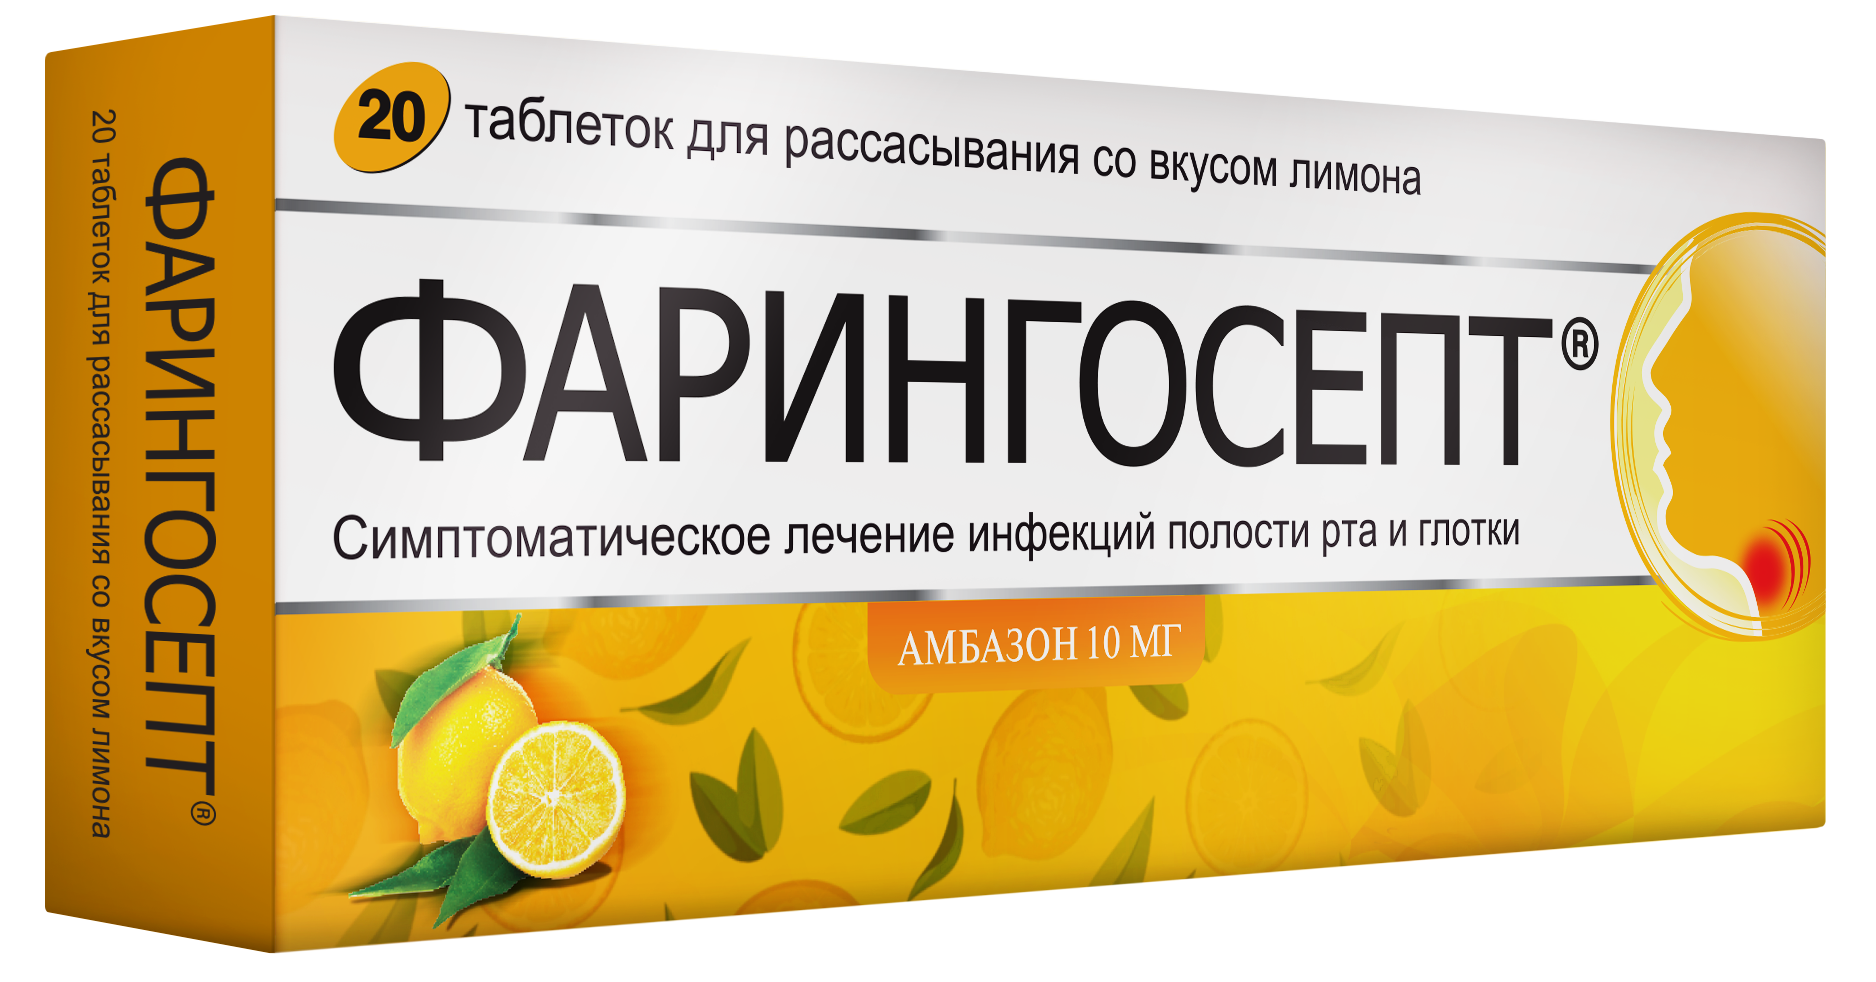 Фарингосепт, таблетки для рассасывания (лимон) 10 мг, 20 шт. фарингосепт таблетки для рассасывания лимон 10 мг 20 шт